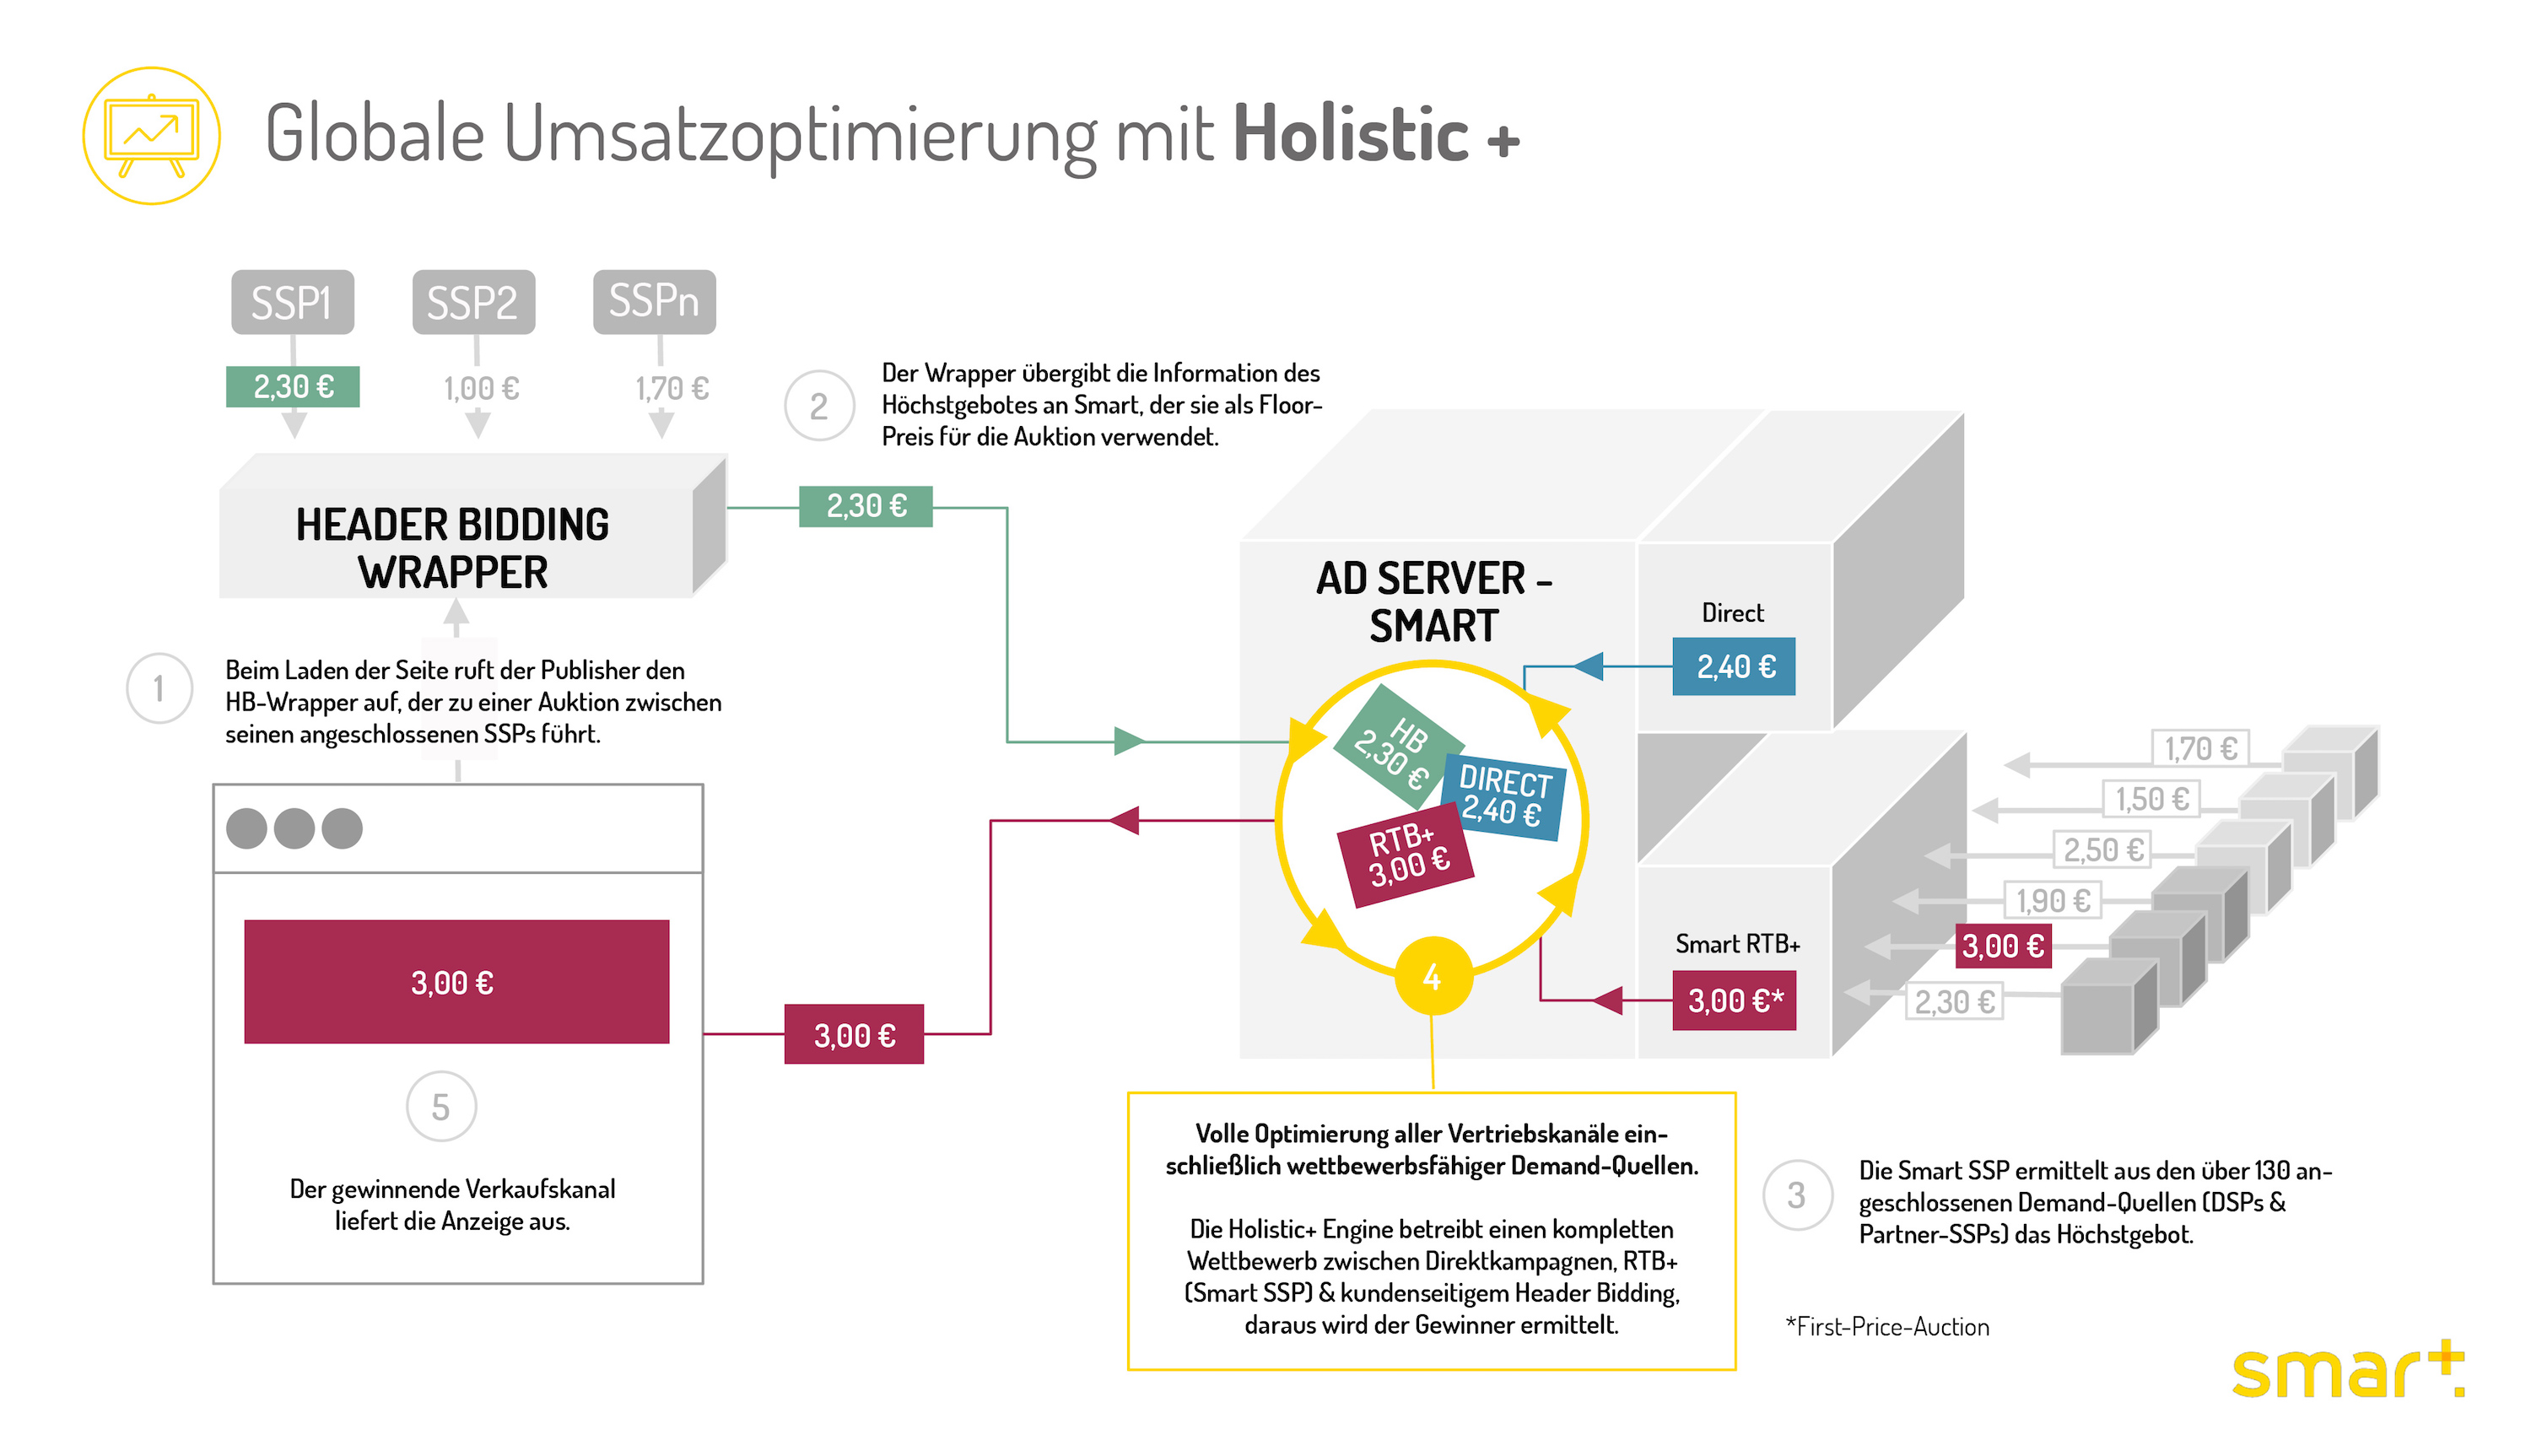 Smart launcht Holistic+ Lösung für Publisher